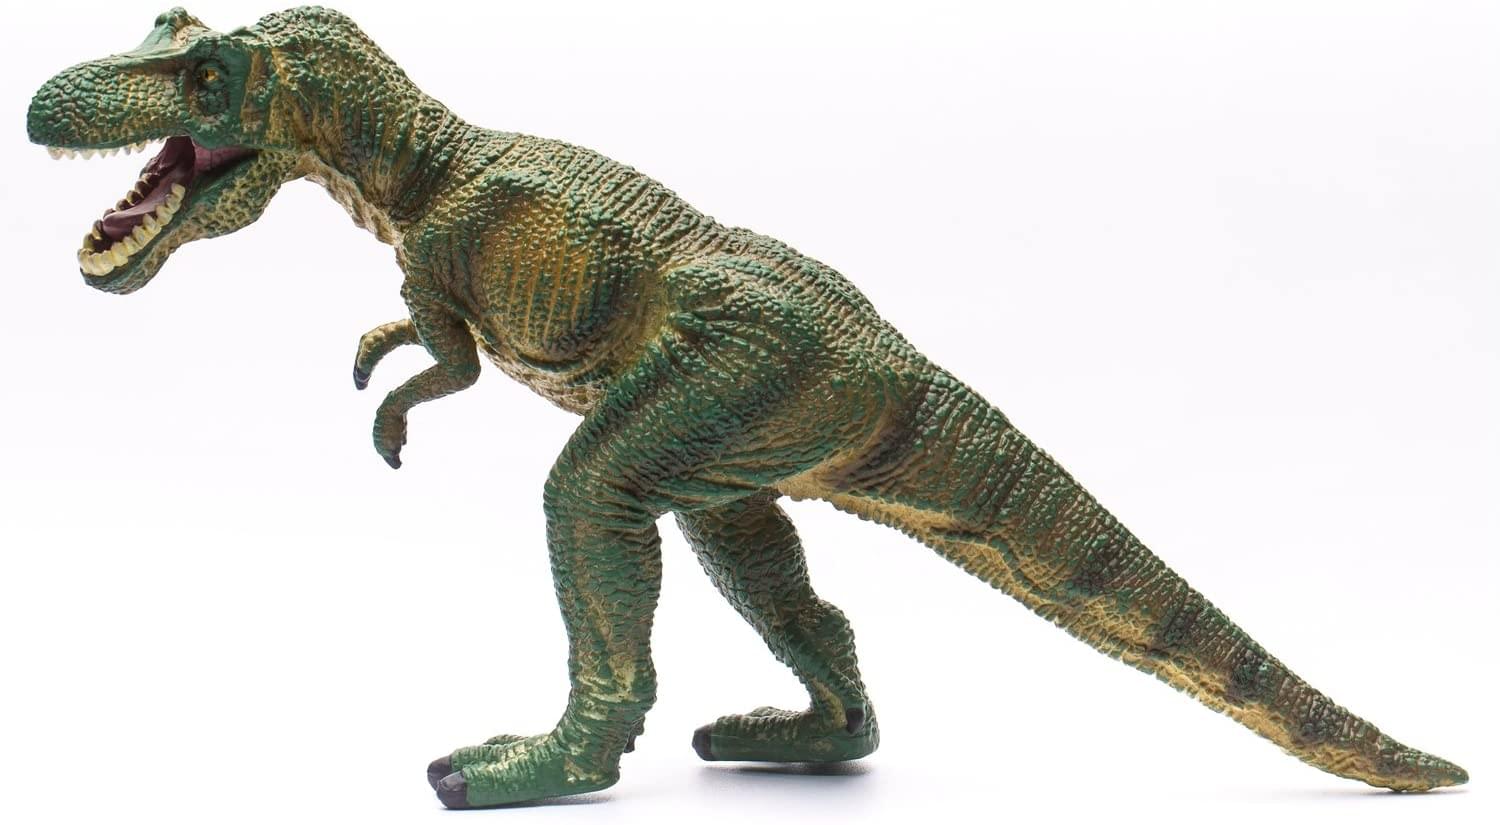 CollectA Prehistoric Life Collection Miniature Figure | Tyrannosaurus Rex Brown